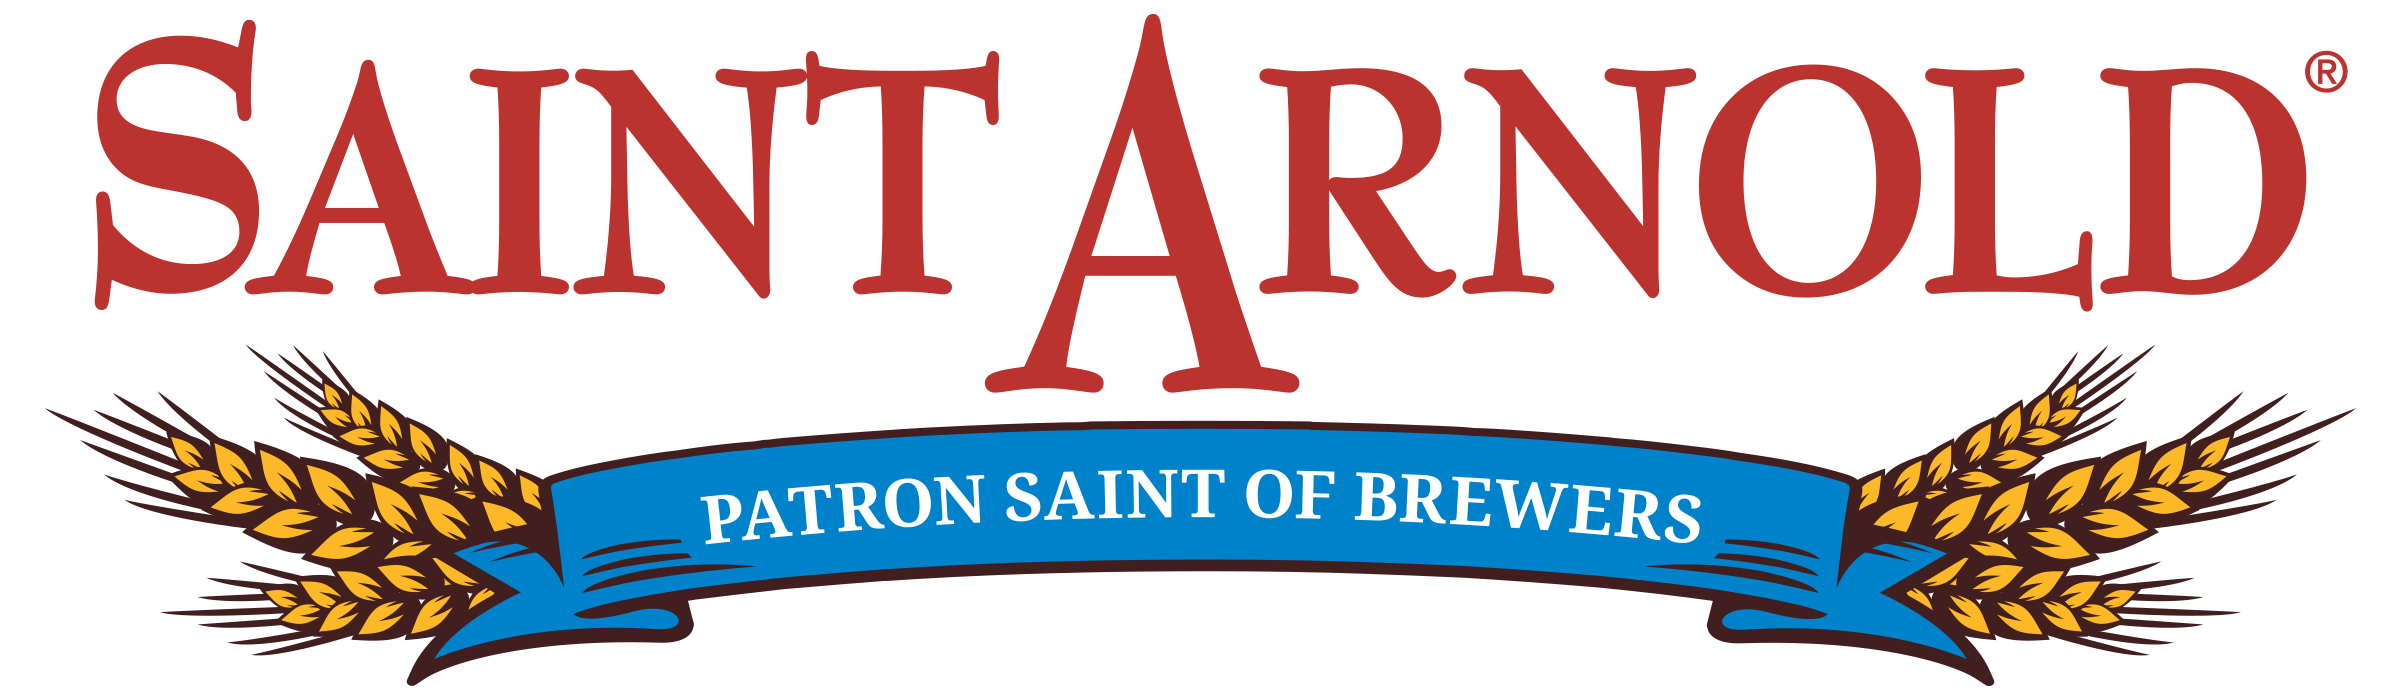 saint arnold banner logo